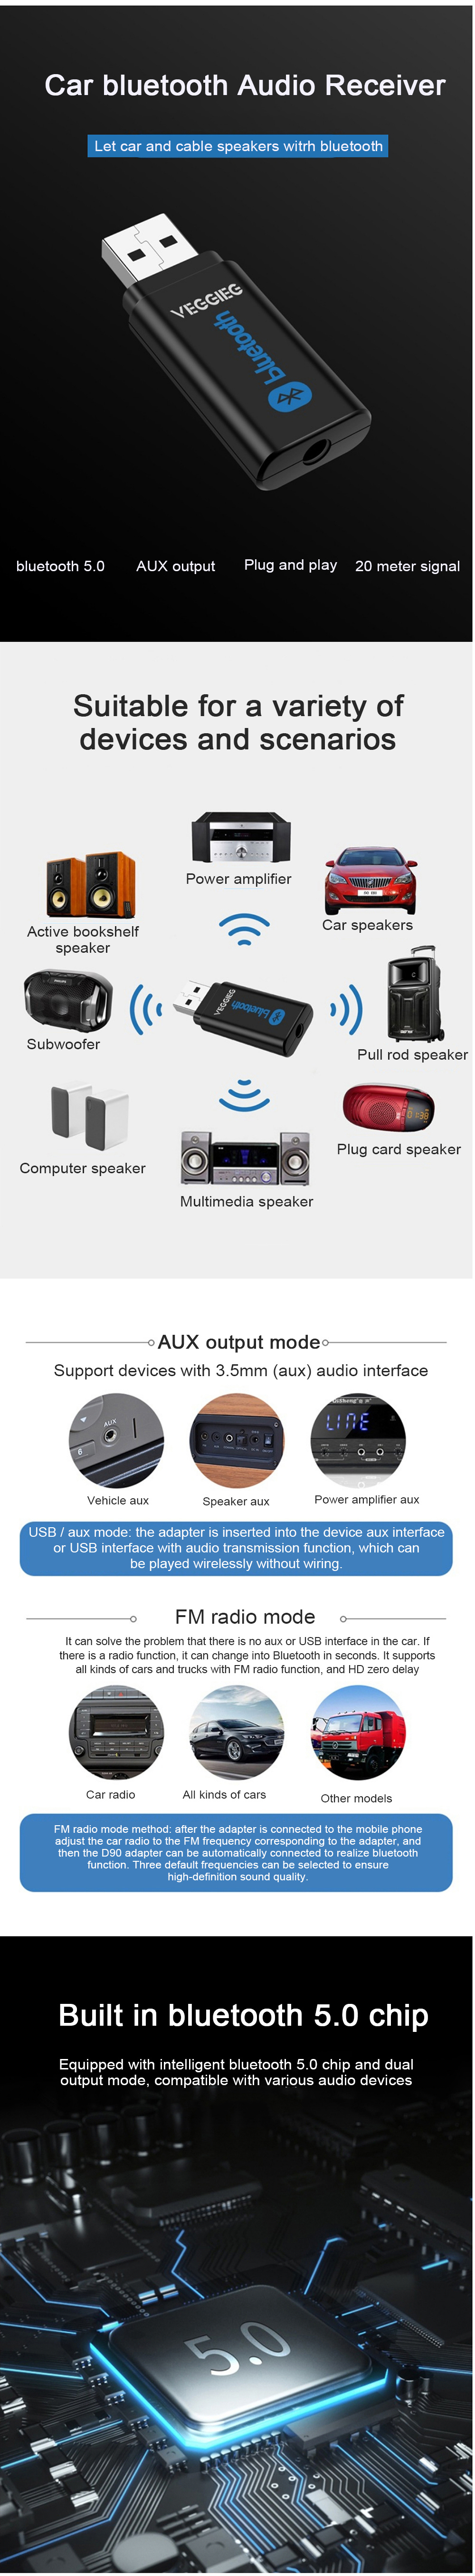 Veggieg-USB-Car-bluetooth50-Adapter-Audio-Receiver-Transmitter-Wireless-bluetooth-Dongles-35mm-Aux-J-1792384-1